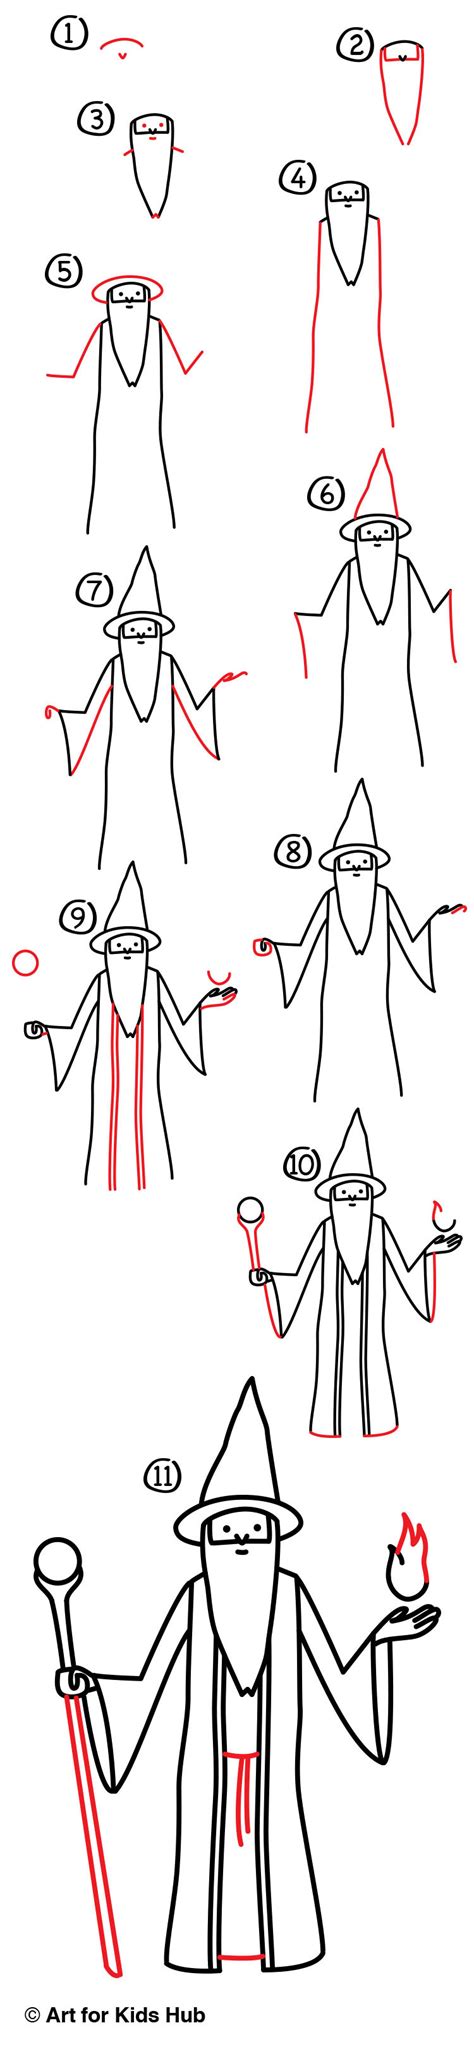 How To Draw A Wizard Art For Kids Hub Art For Kids Hub Easy Art